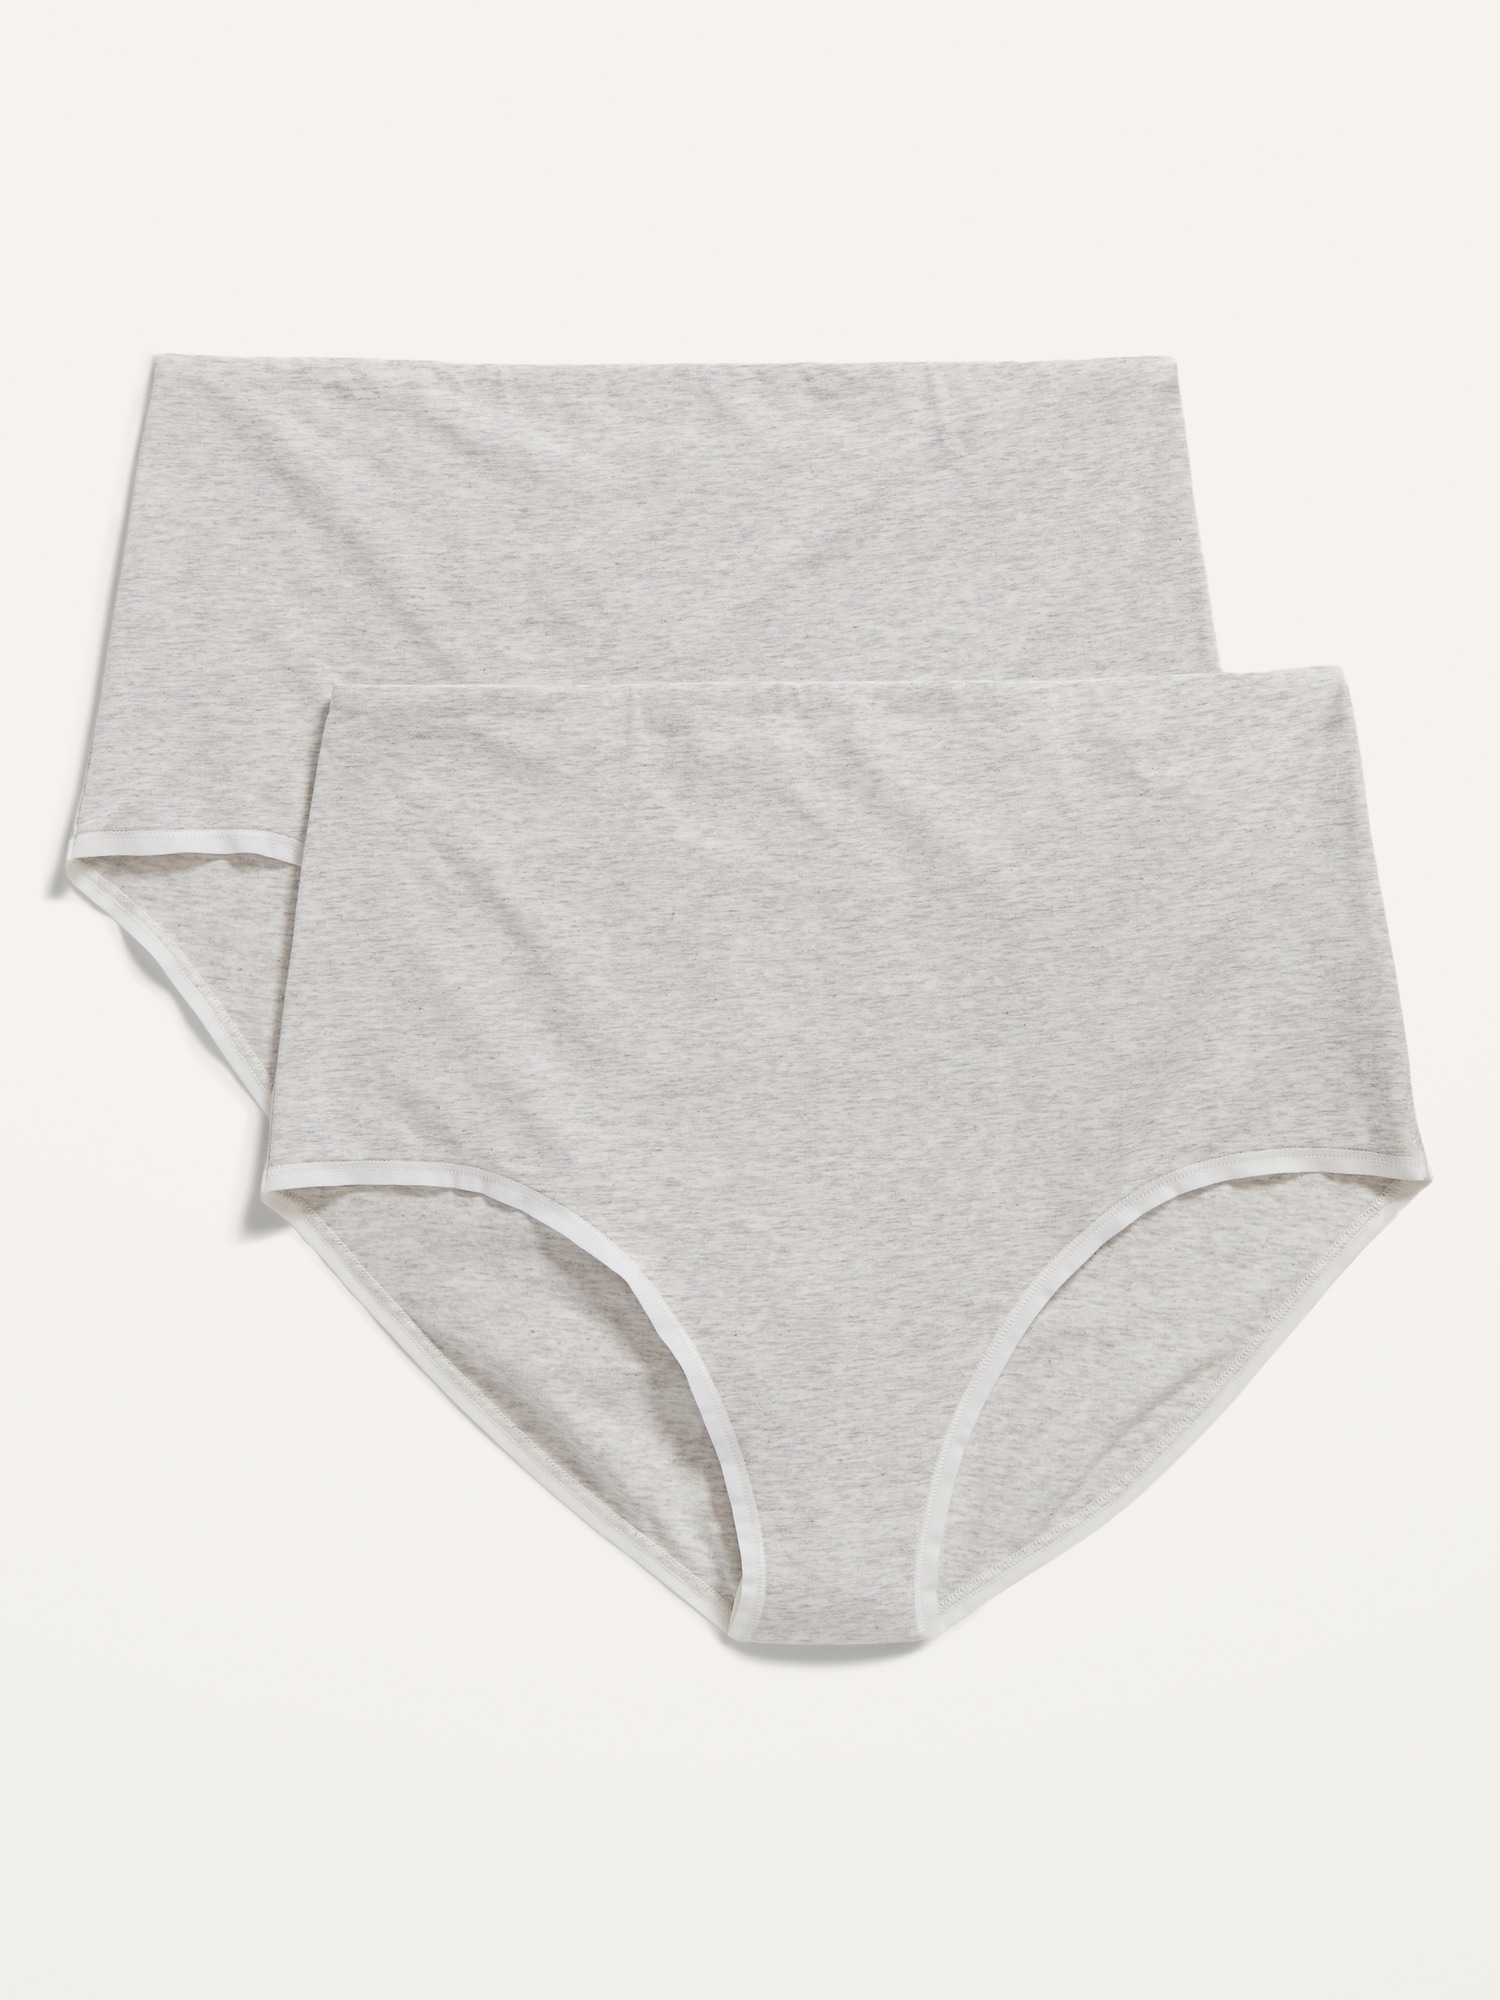 NBB Women's Adjustable Maternity high cut Cotton underwear Brief (Plum,  Small) 